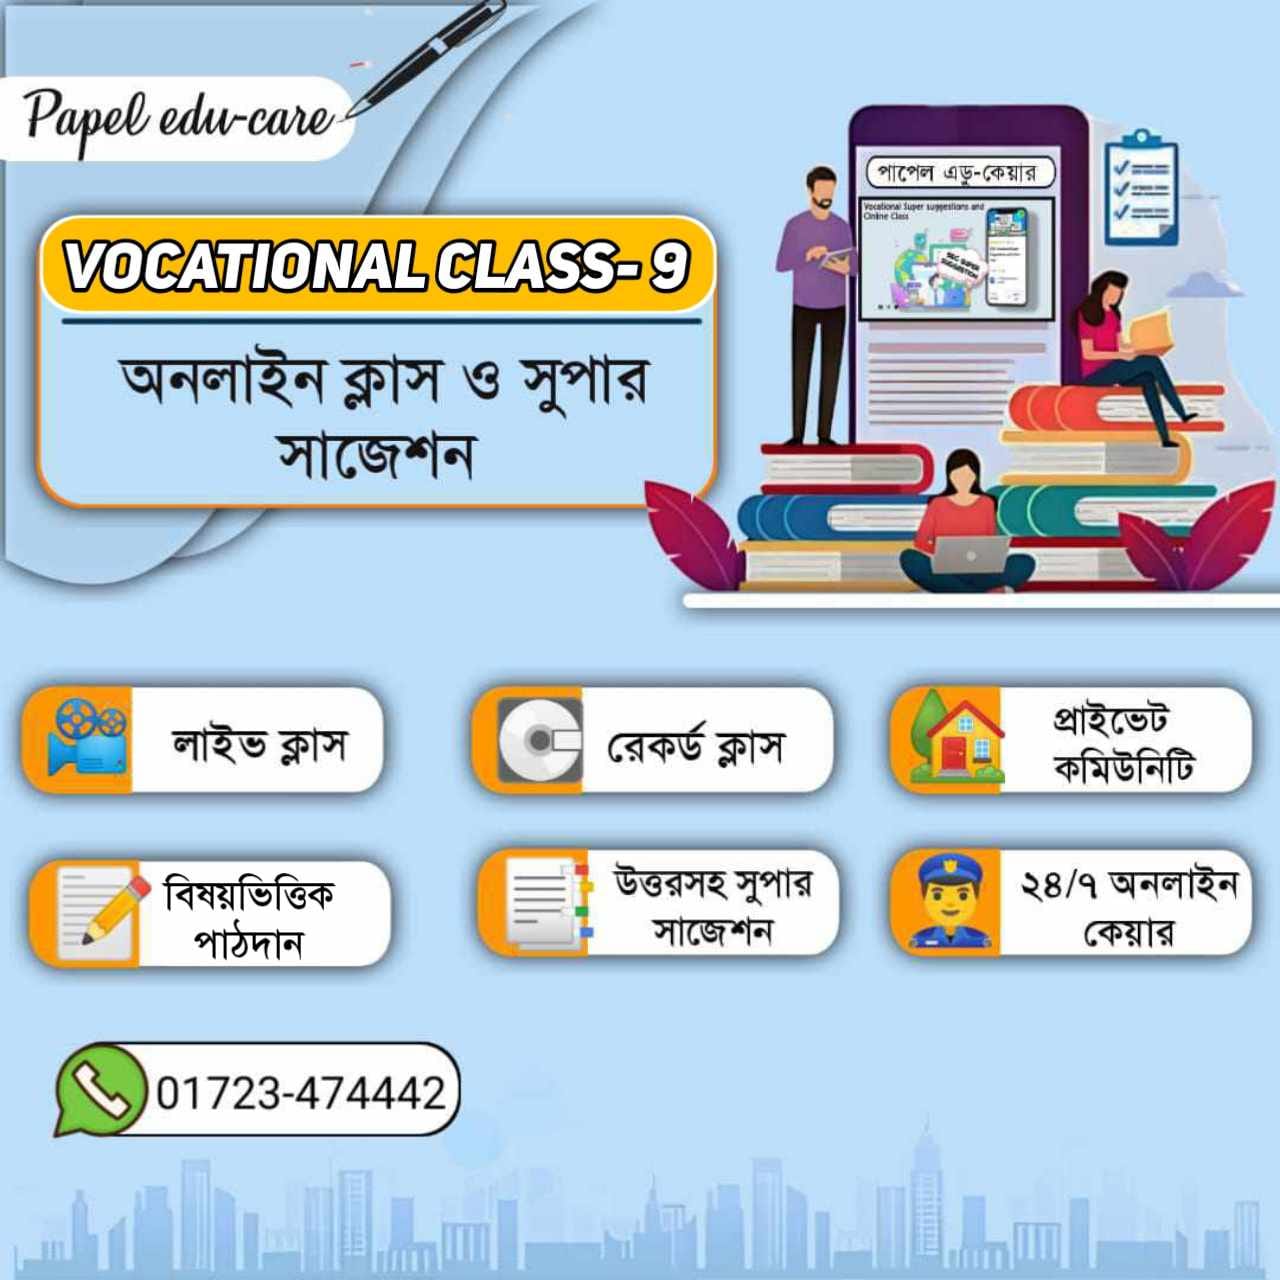 Vocational class 9 online course